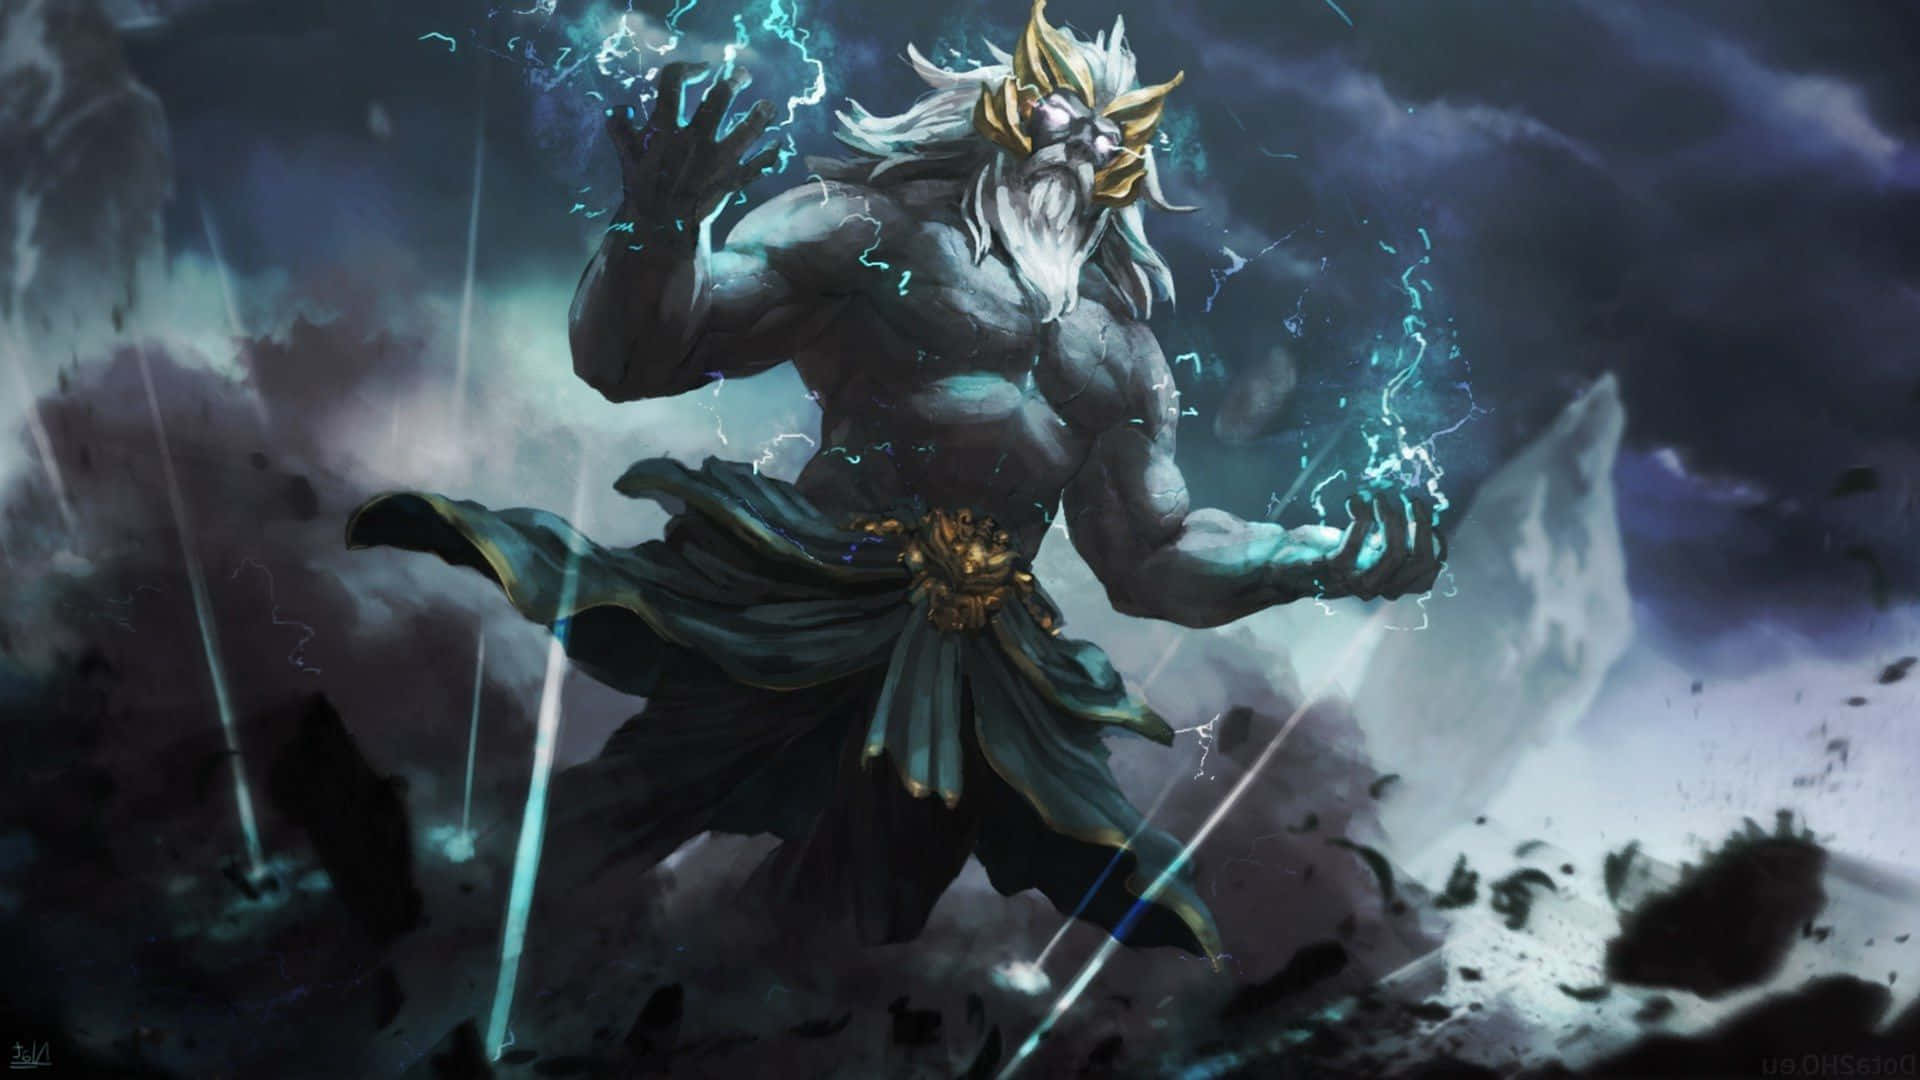 Mighty Zeus Unleashes His Power in Dota 2 Wallpaper